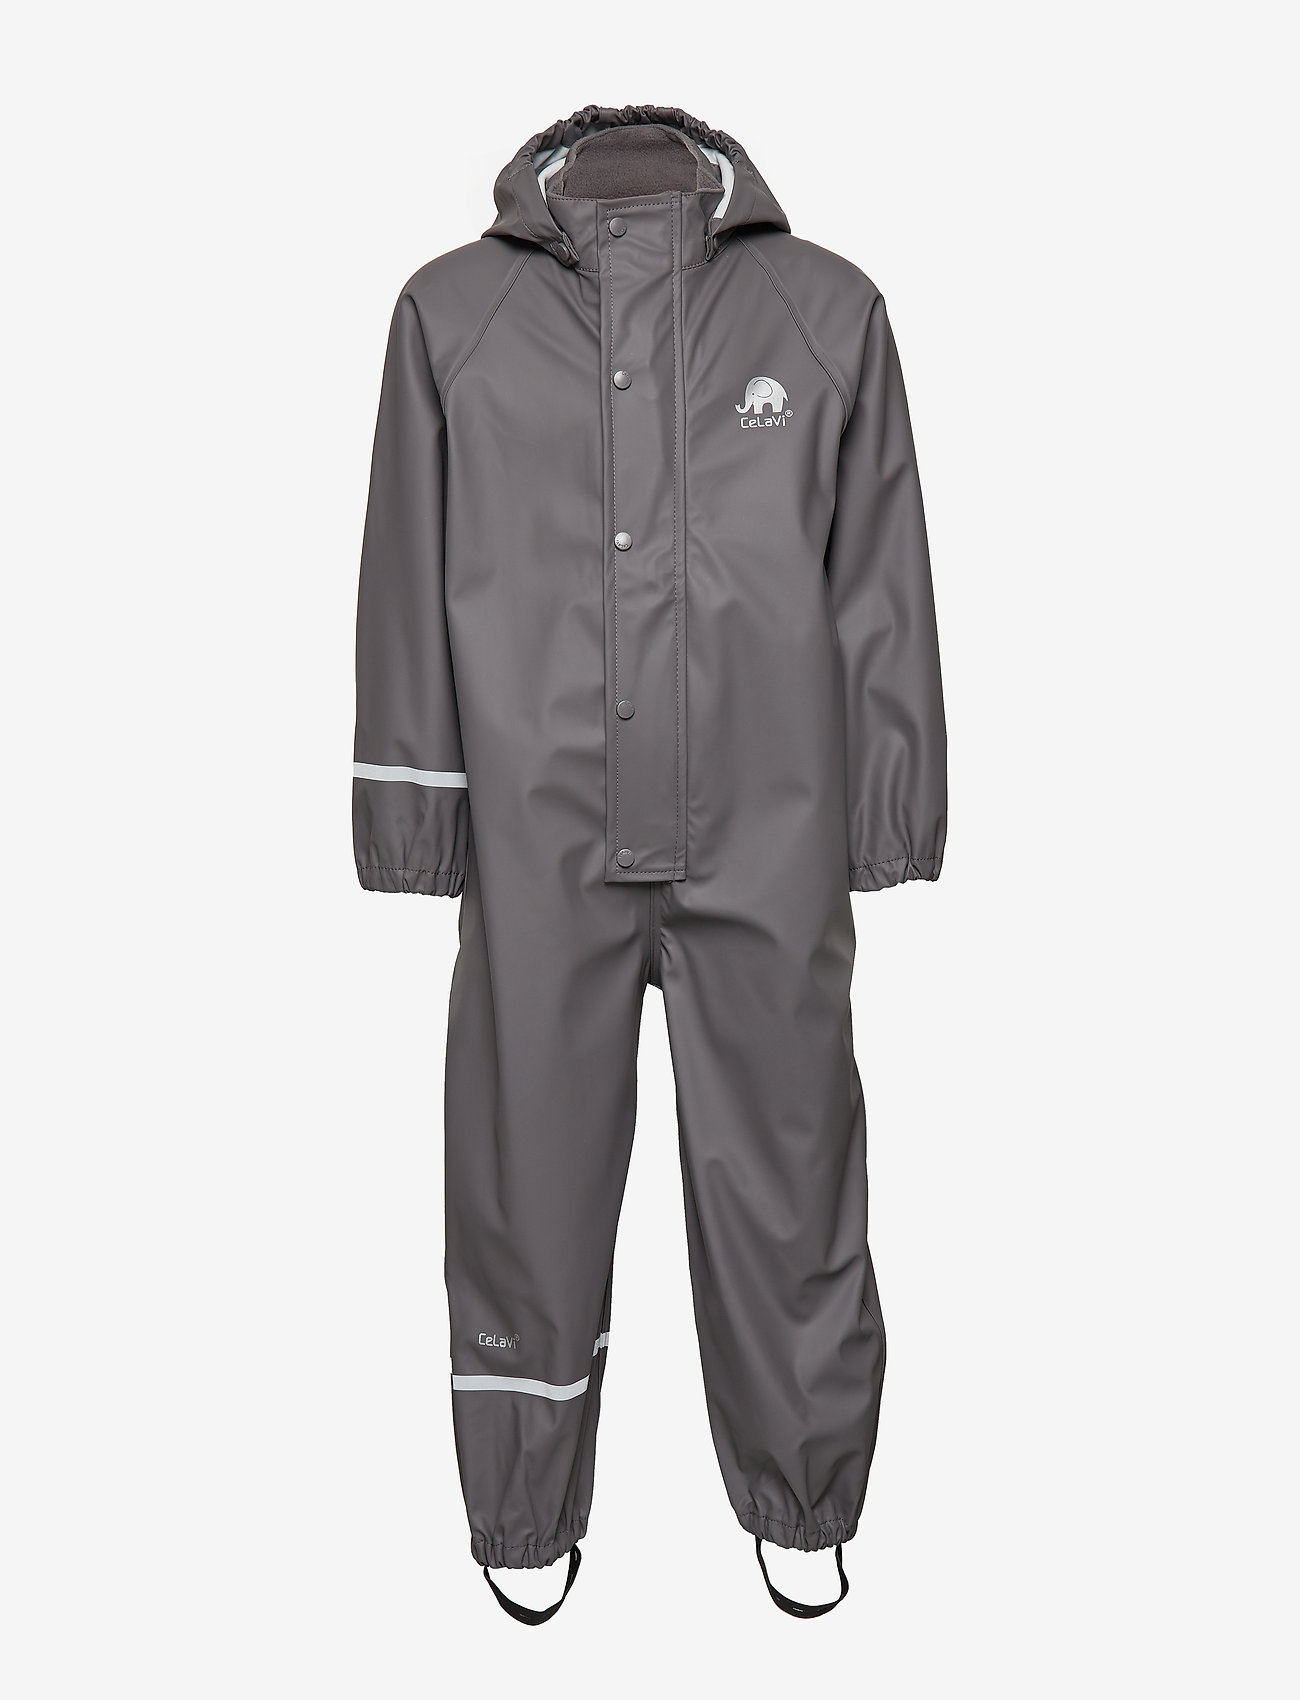 CeLaVi - Rainwear suit -Solid PU - lietus valkā kombinezoni - grey - 1